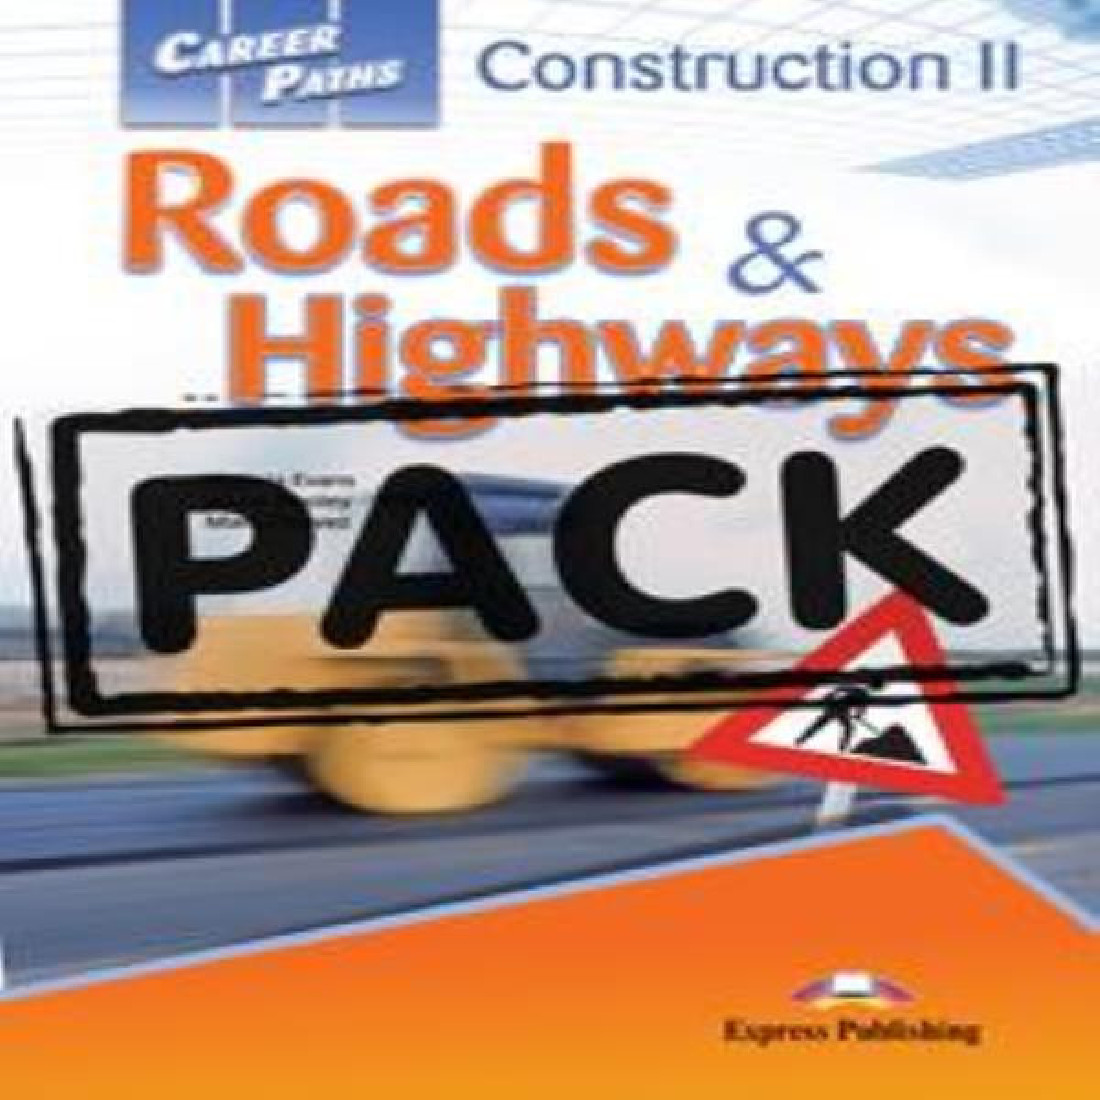 CAREER PATHS CONSTRUCTION 2 - ROADS & HIGHWAYS (+CDs) US VERSION